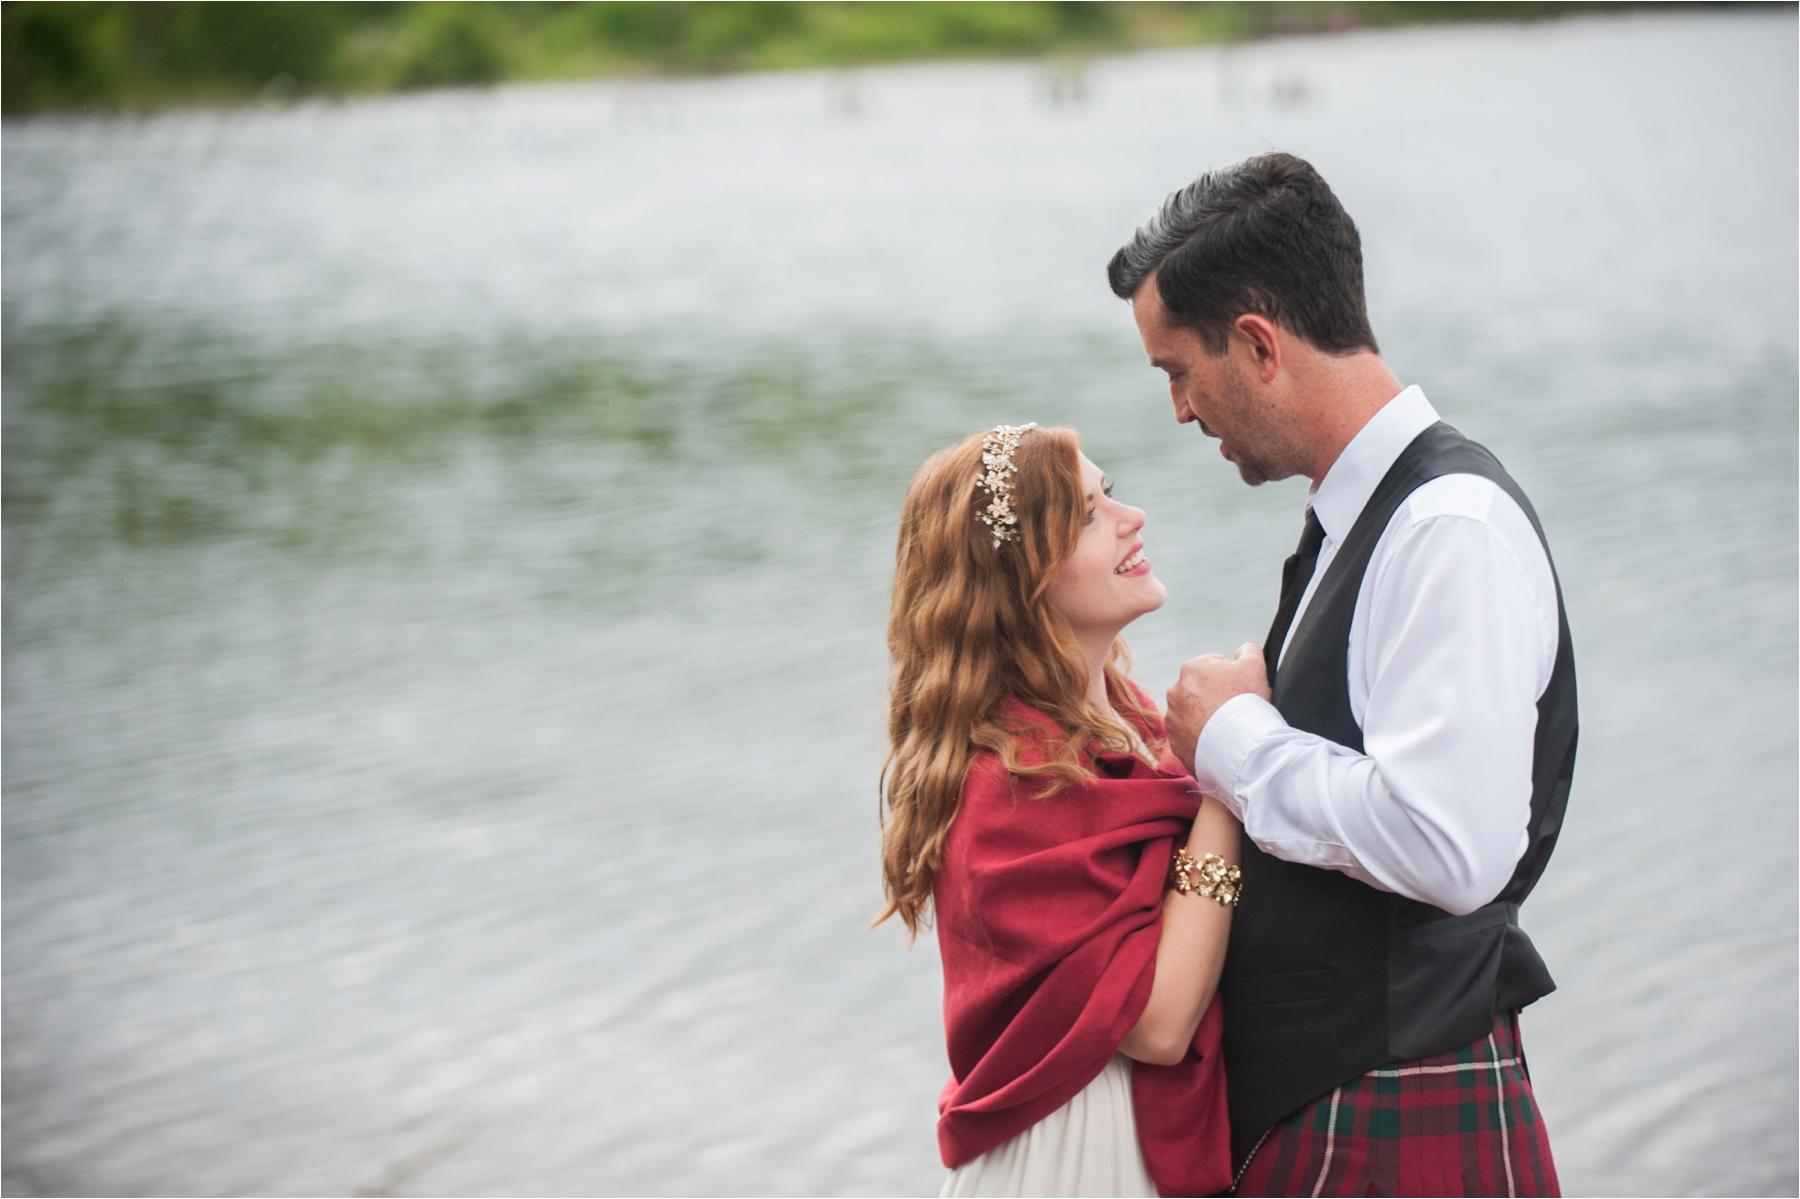 getting married at elopement wedding scottish highland wedding photographer